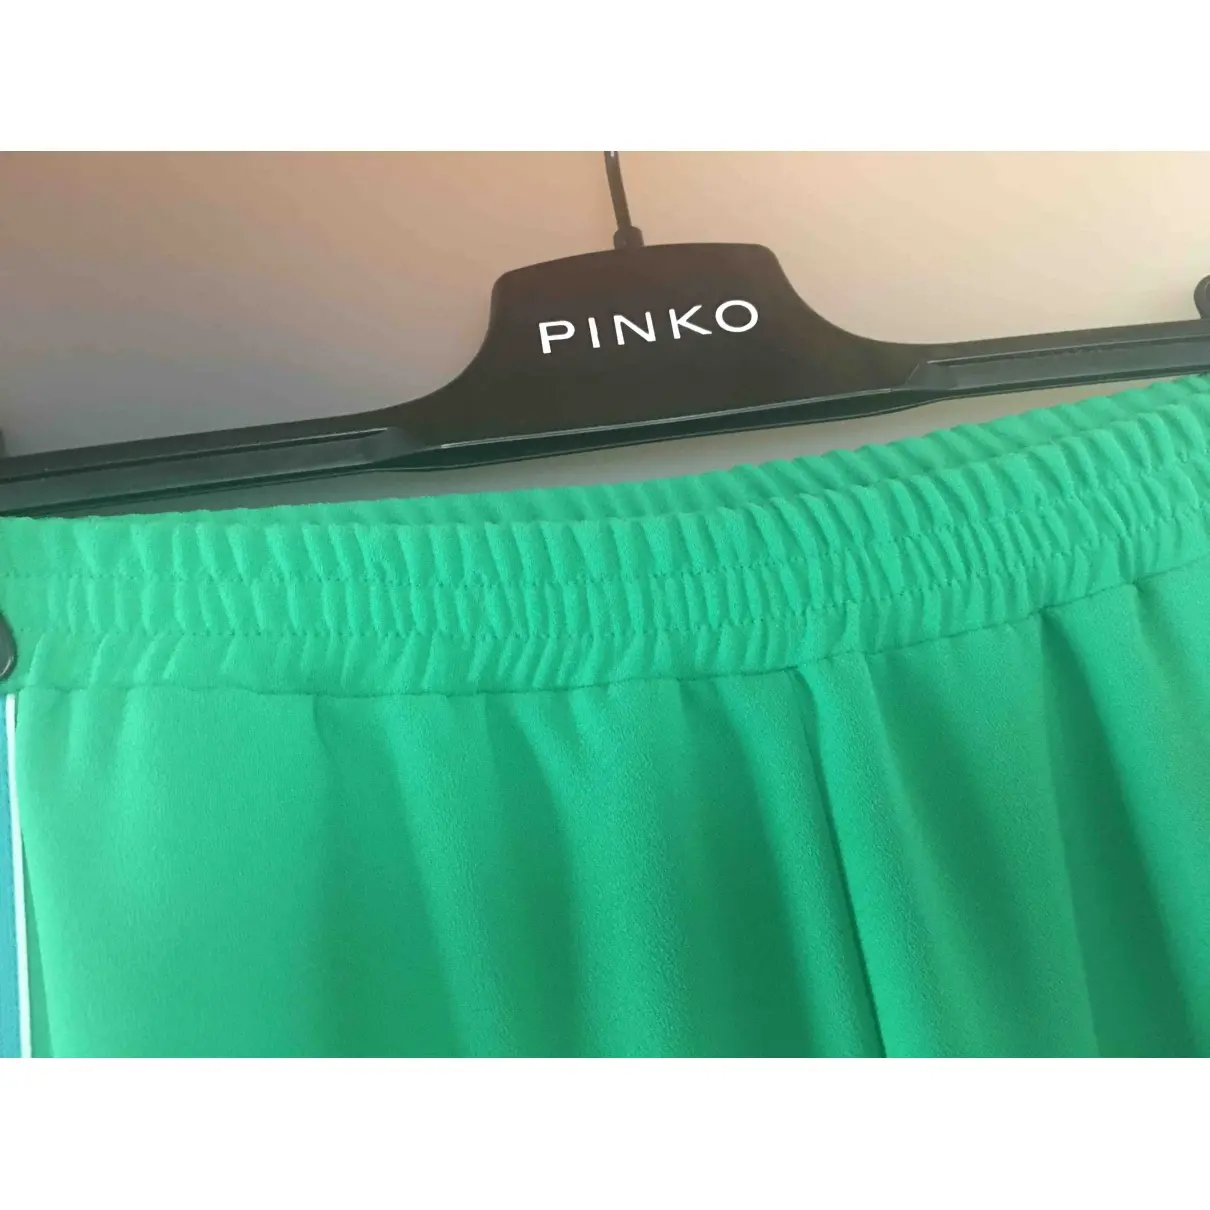 Buy Pinko Large pants online